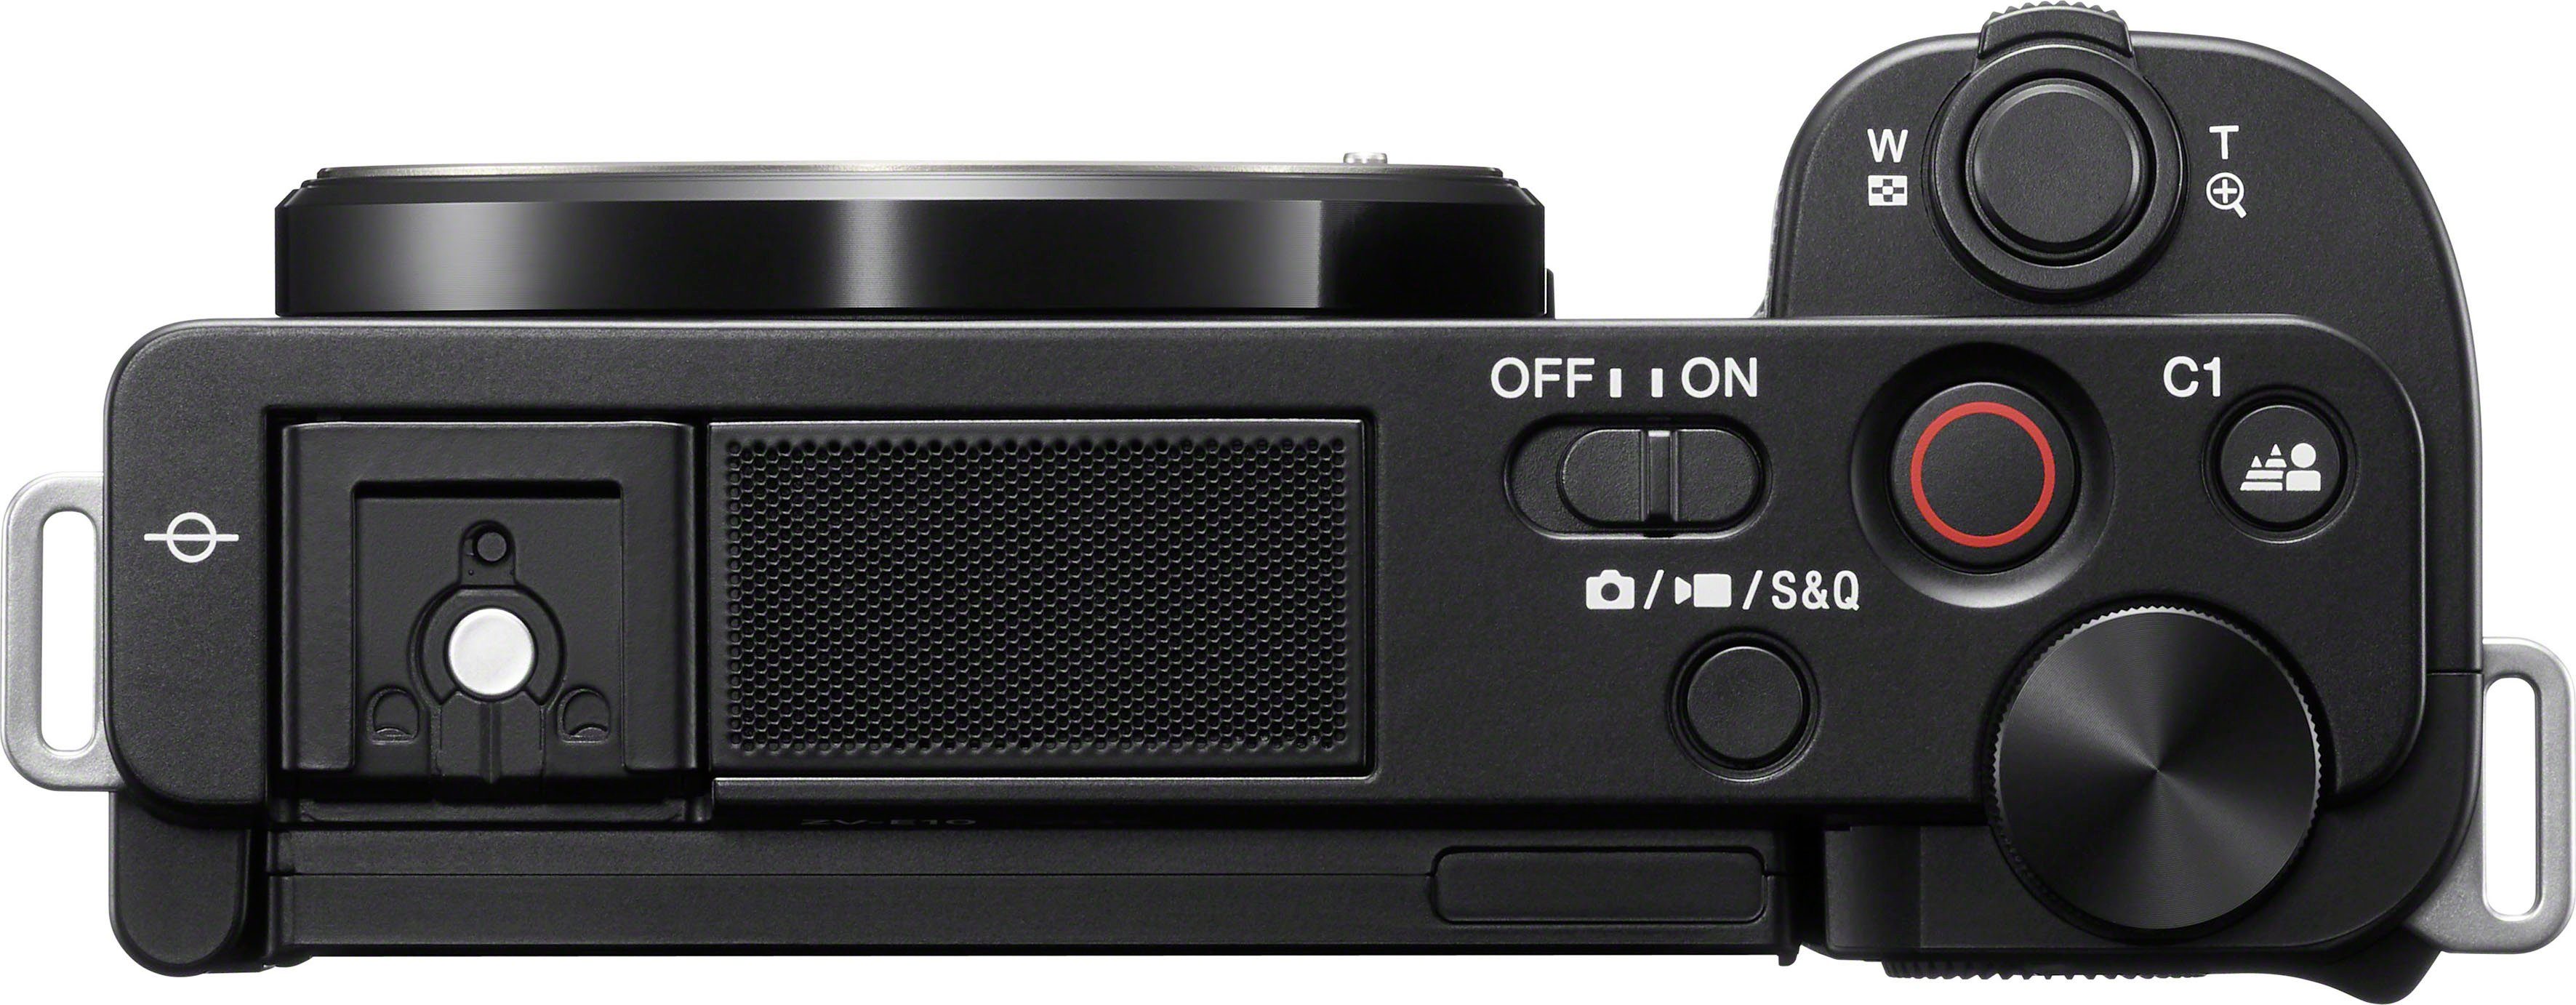 Sony ZV-E10L WLAN Bluetooth, mm - (E 5.6 MP, Objektiv) OSS - mit Systemkamera 24,2 16 (WiFi), inkl. SEL16-50 schwenkbarem 50 Display (SELP1650), Vlog-Kamera F3.5 PZ